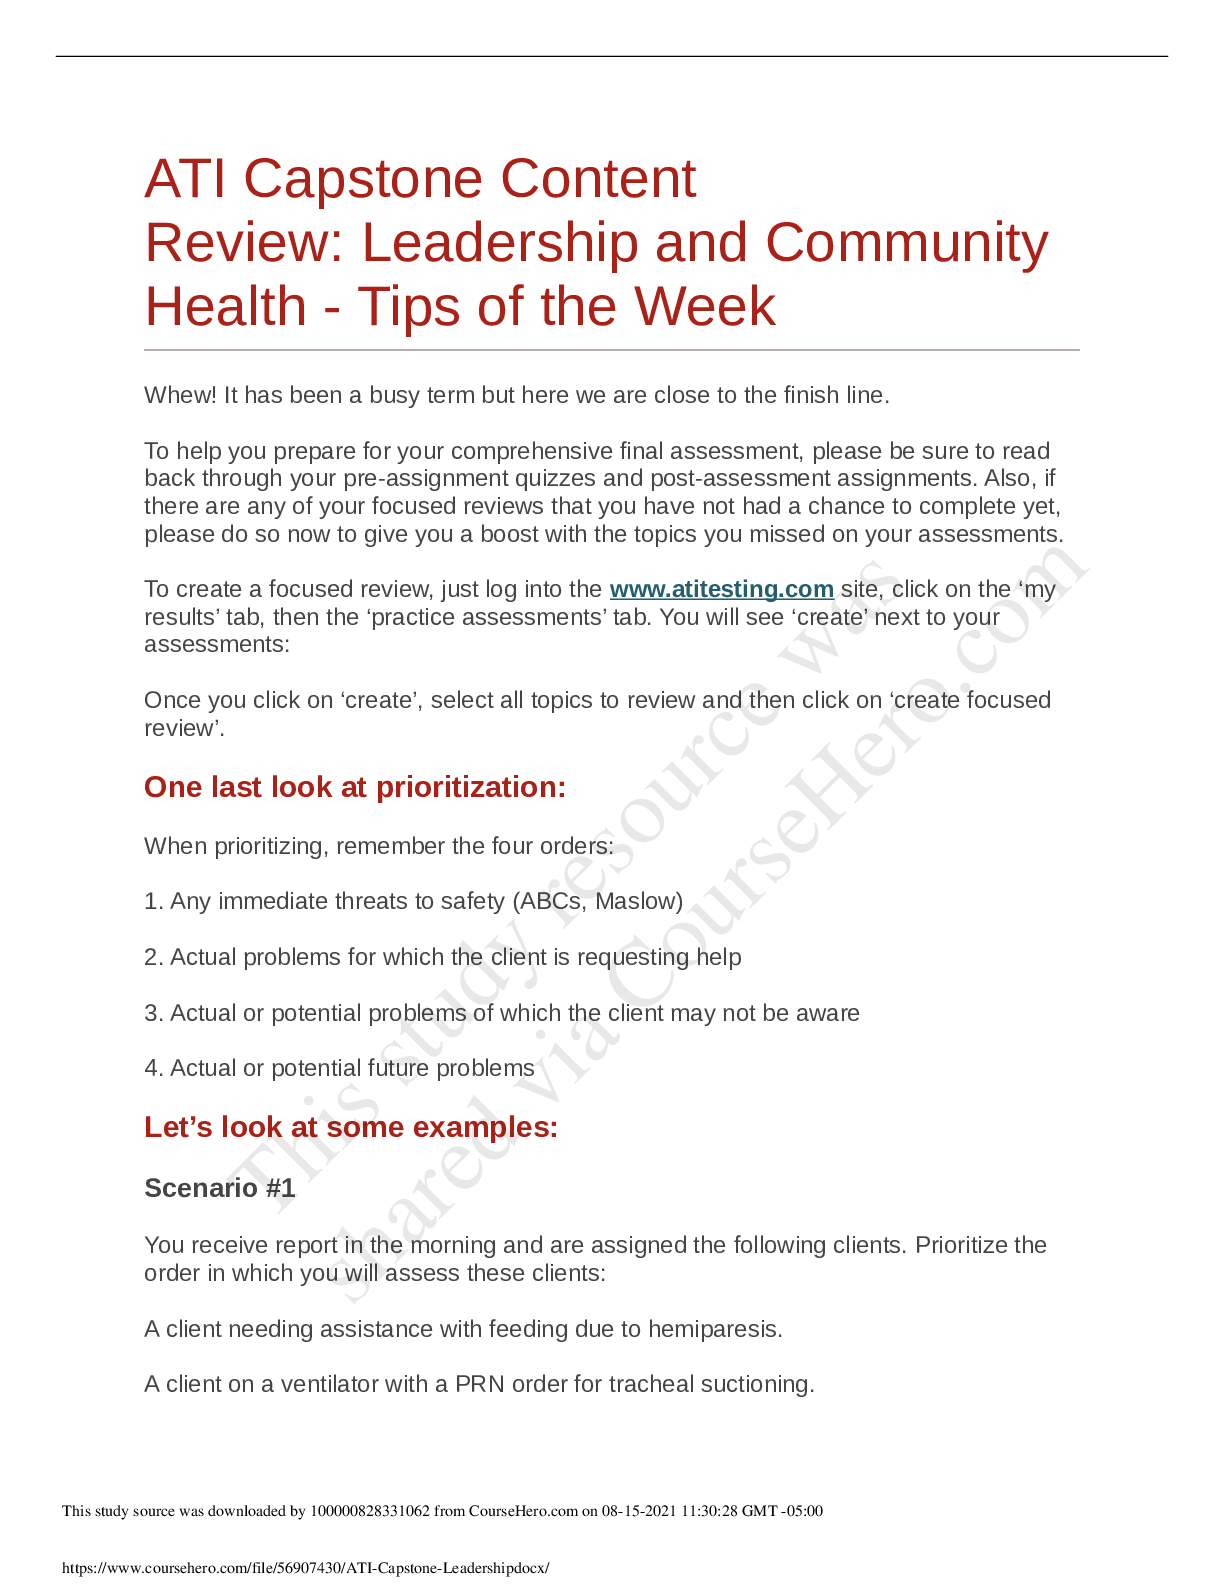 ati capstone leadership and community health pre assignment quiz